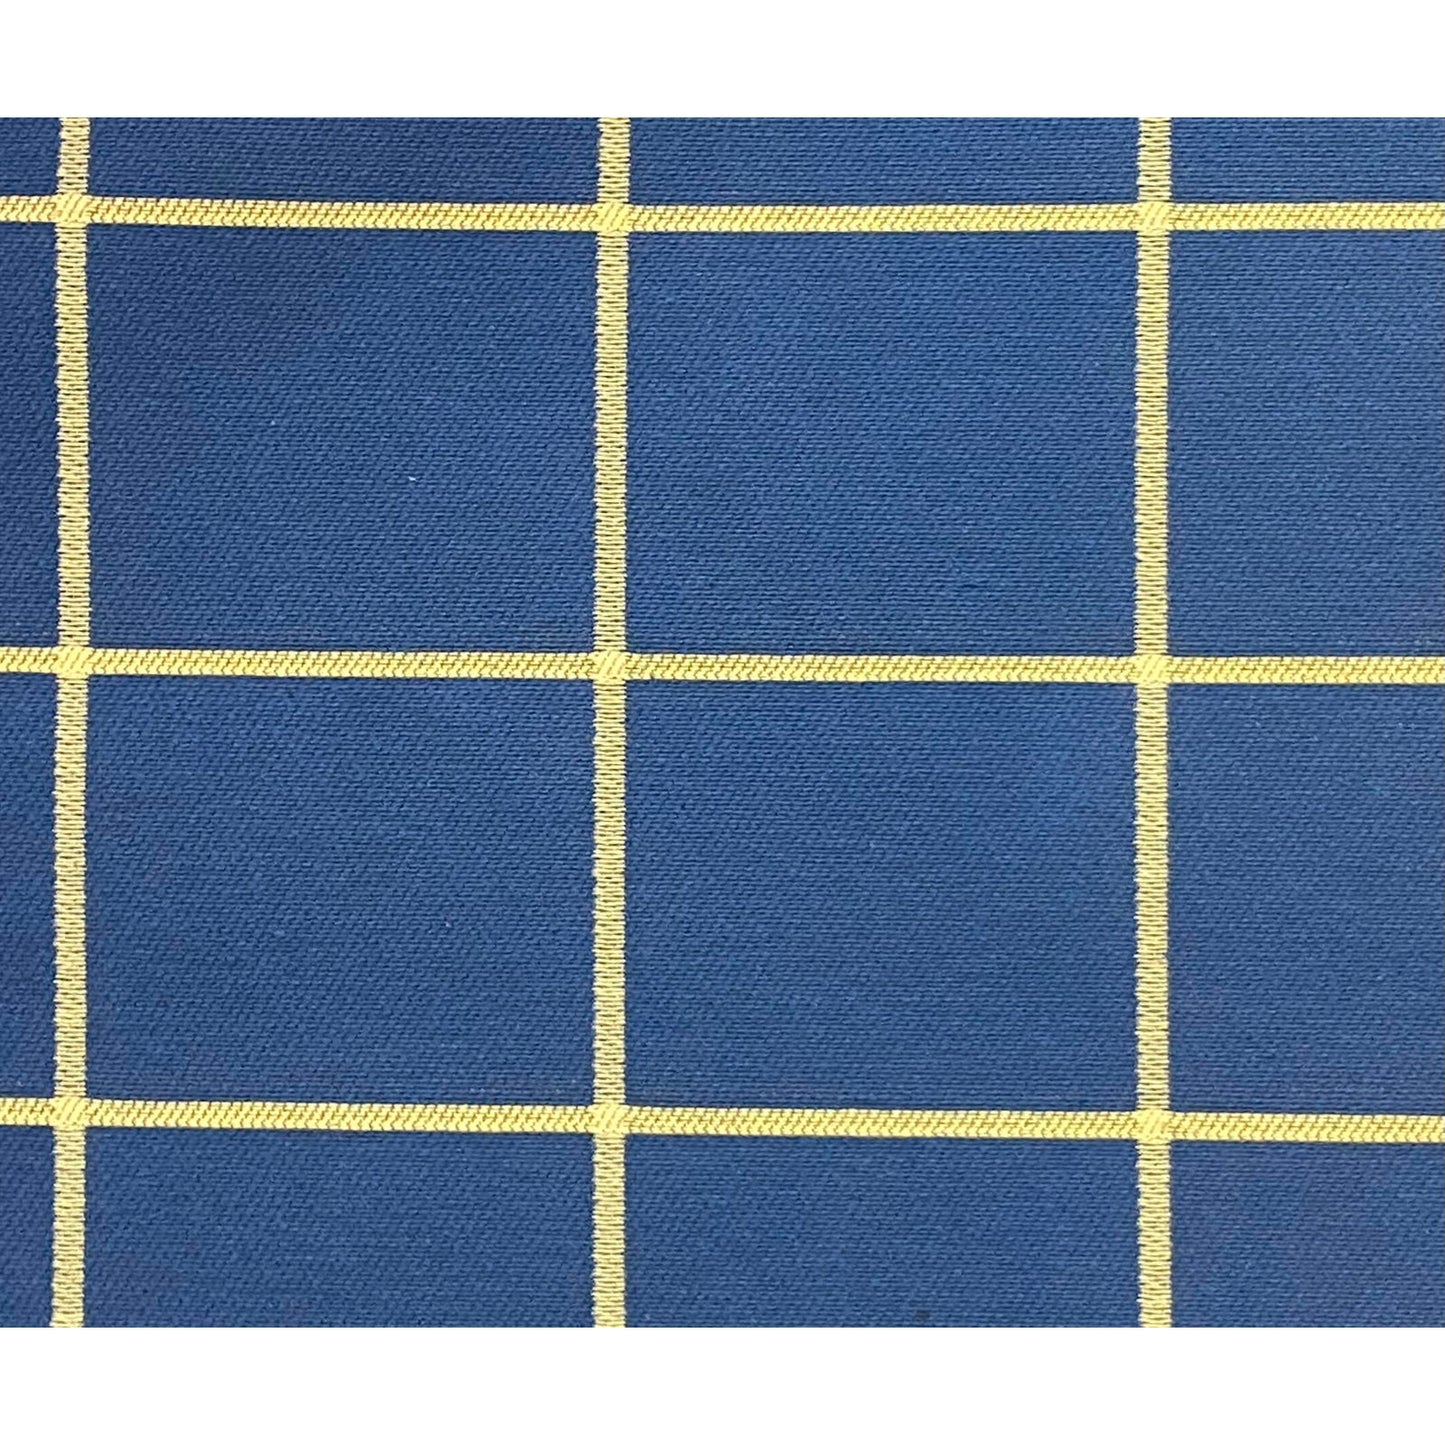 Classic MCM Blue Checks Wool Linen Upholstery Fabric Yardage ABBY ESSIE STUDIOS